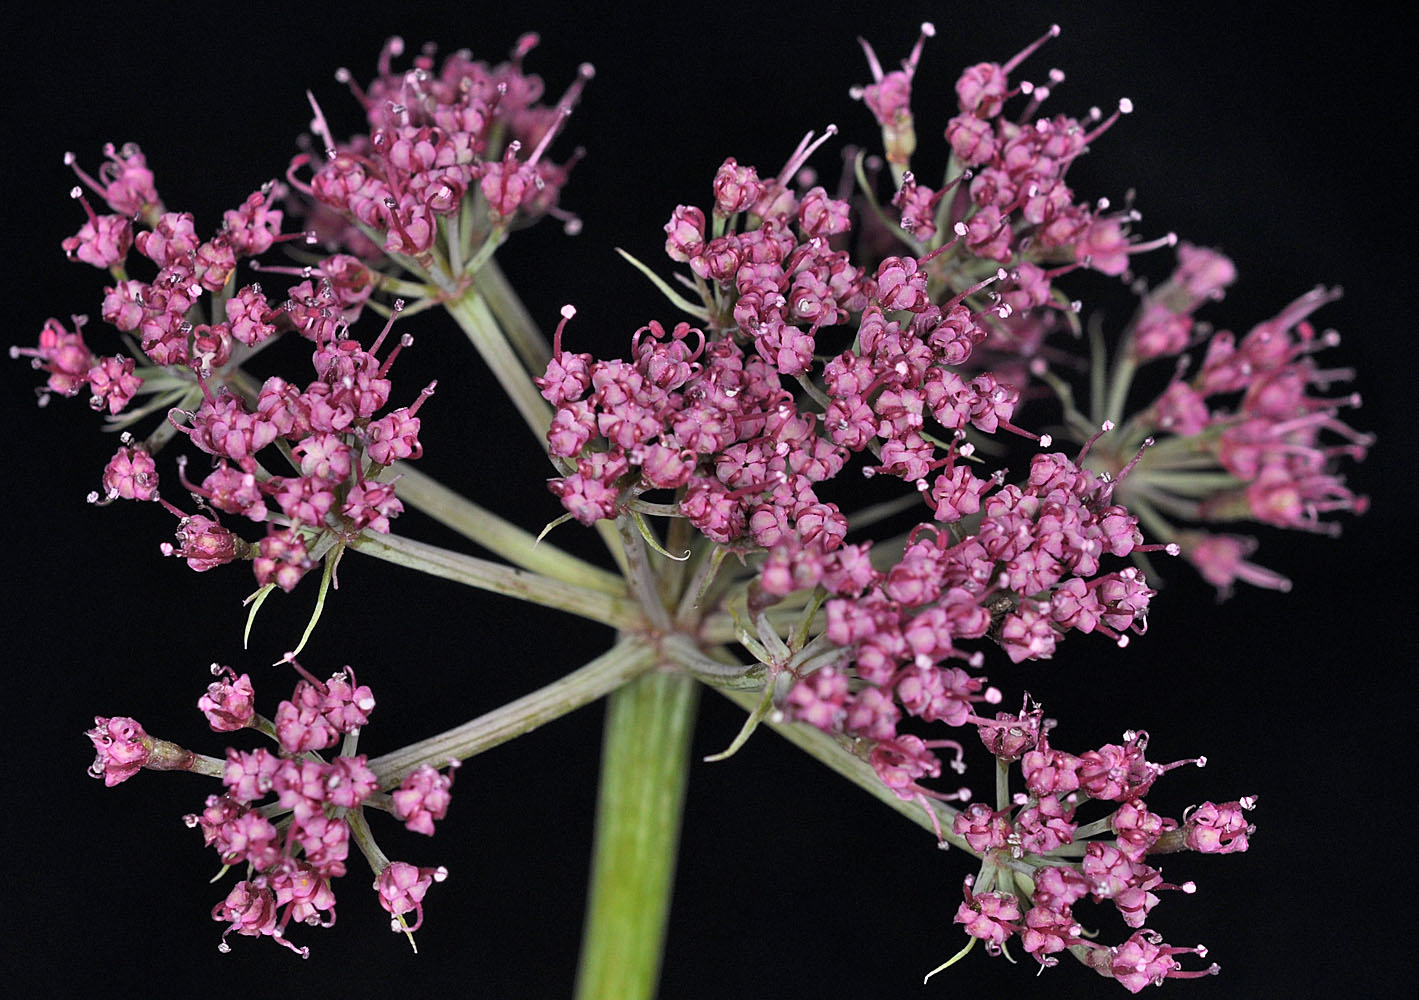 Flora of Eastern Washington Image: Lomatium columbianum